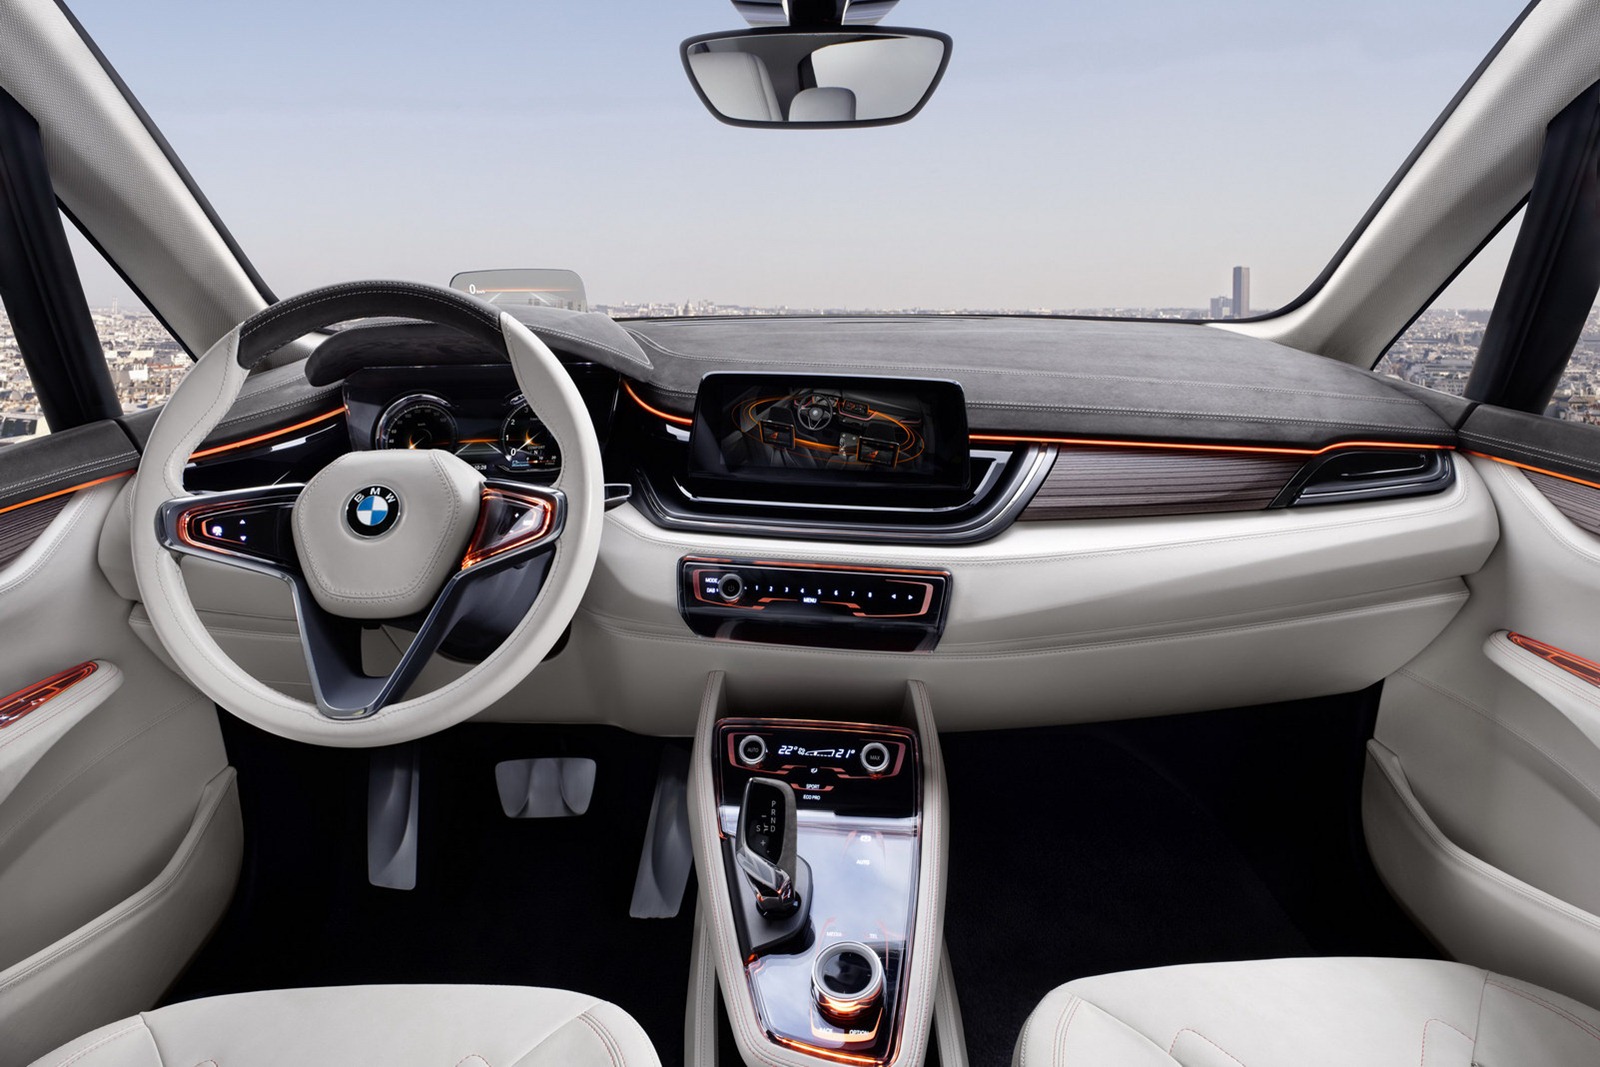 Amazing BMW Concept Active Tourer Pictures & Backgrounds